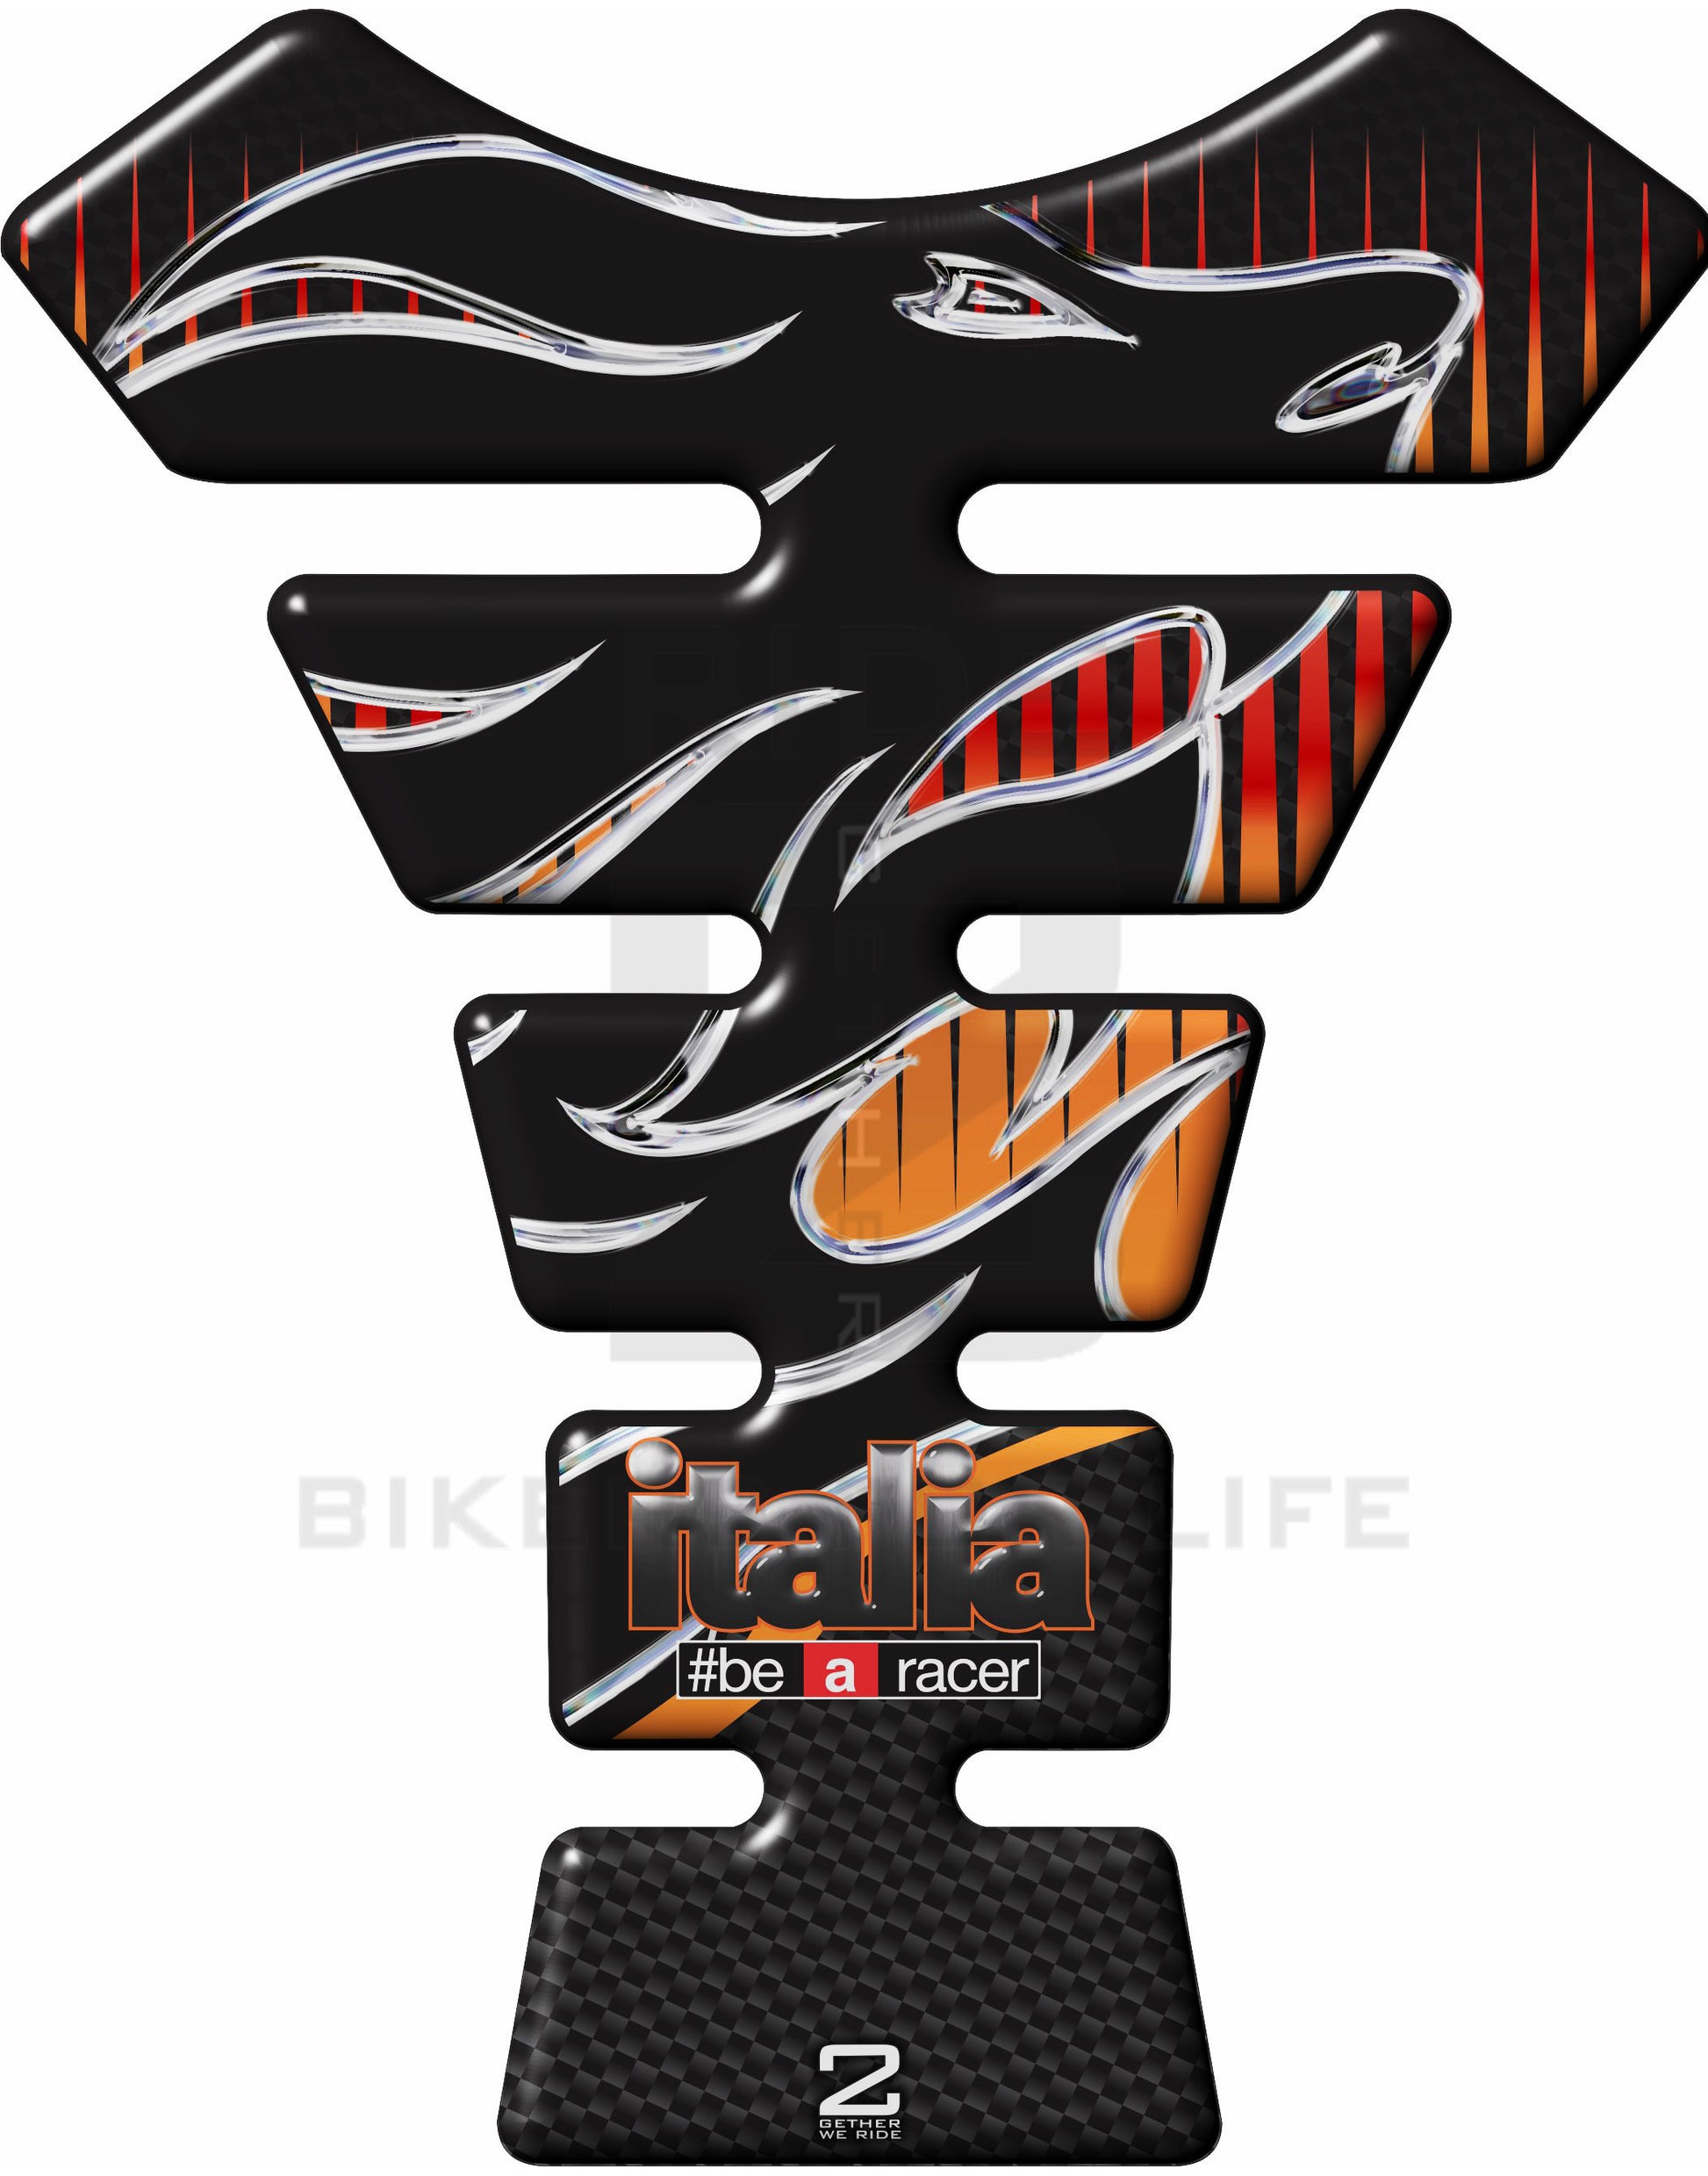 Aprilia  RSV 1000 - MILLE - RS250 - RSV4 - RSV4R - FALCO etc Italia Factory  Racing  Black and Chrome Universal Fit  Motor Bike Tank Pad / Protector. Fits most models